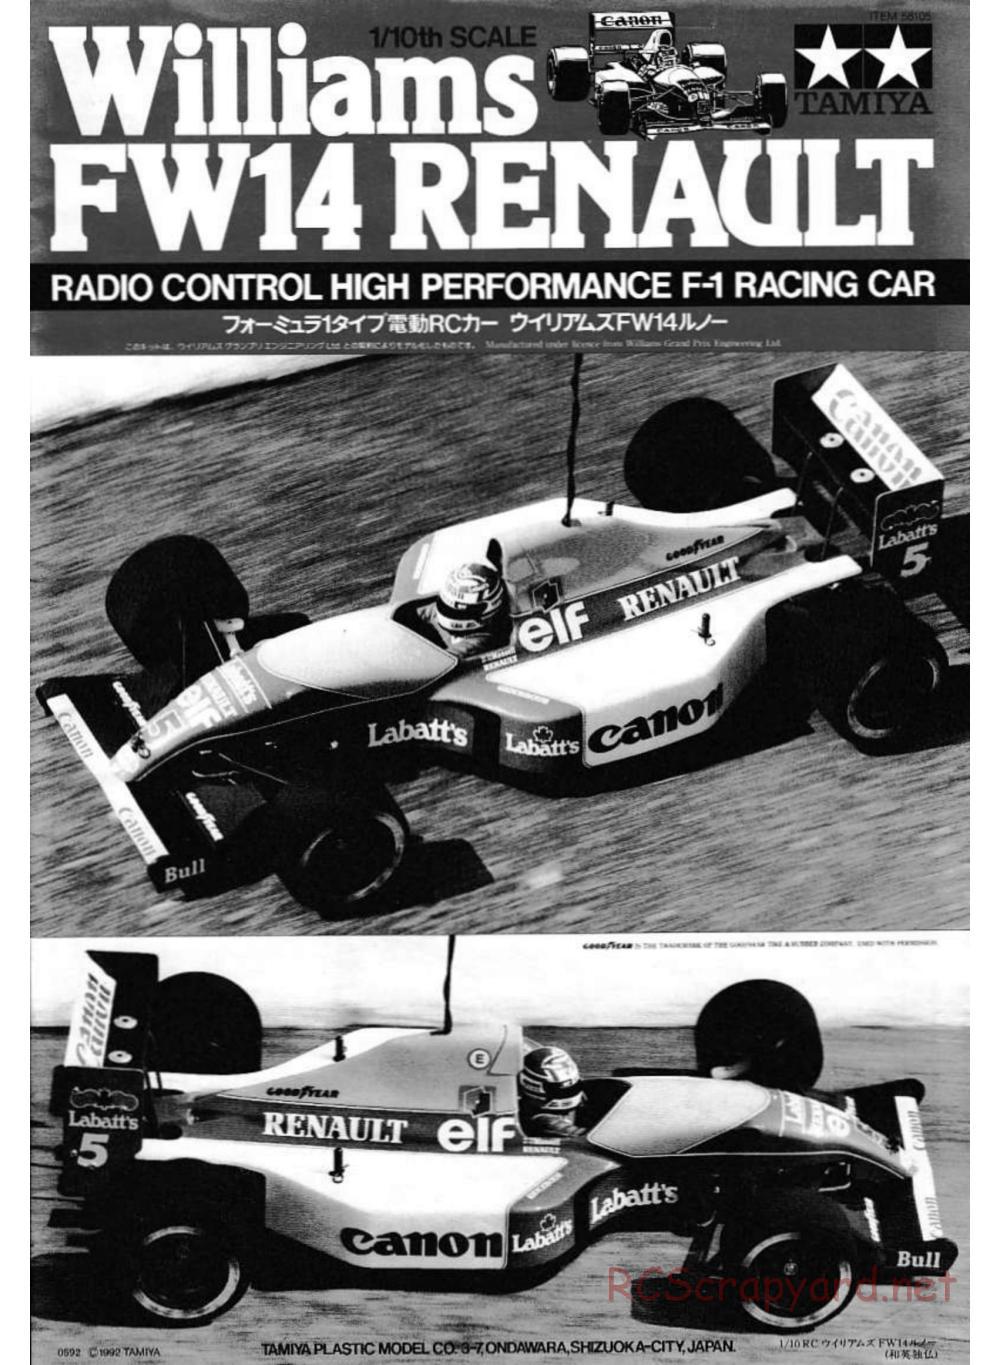 Tamiya - Williams FW14 Renault - F102 Chassis - Manual - Page 1